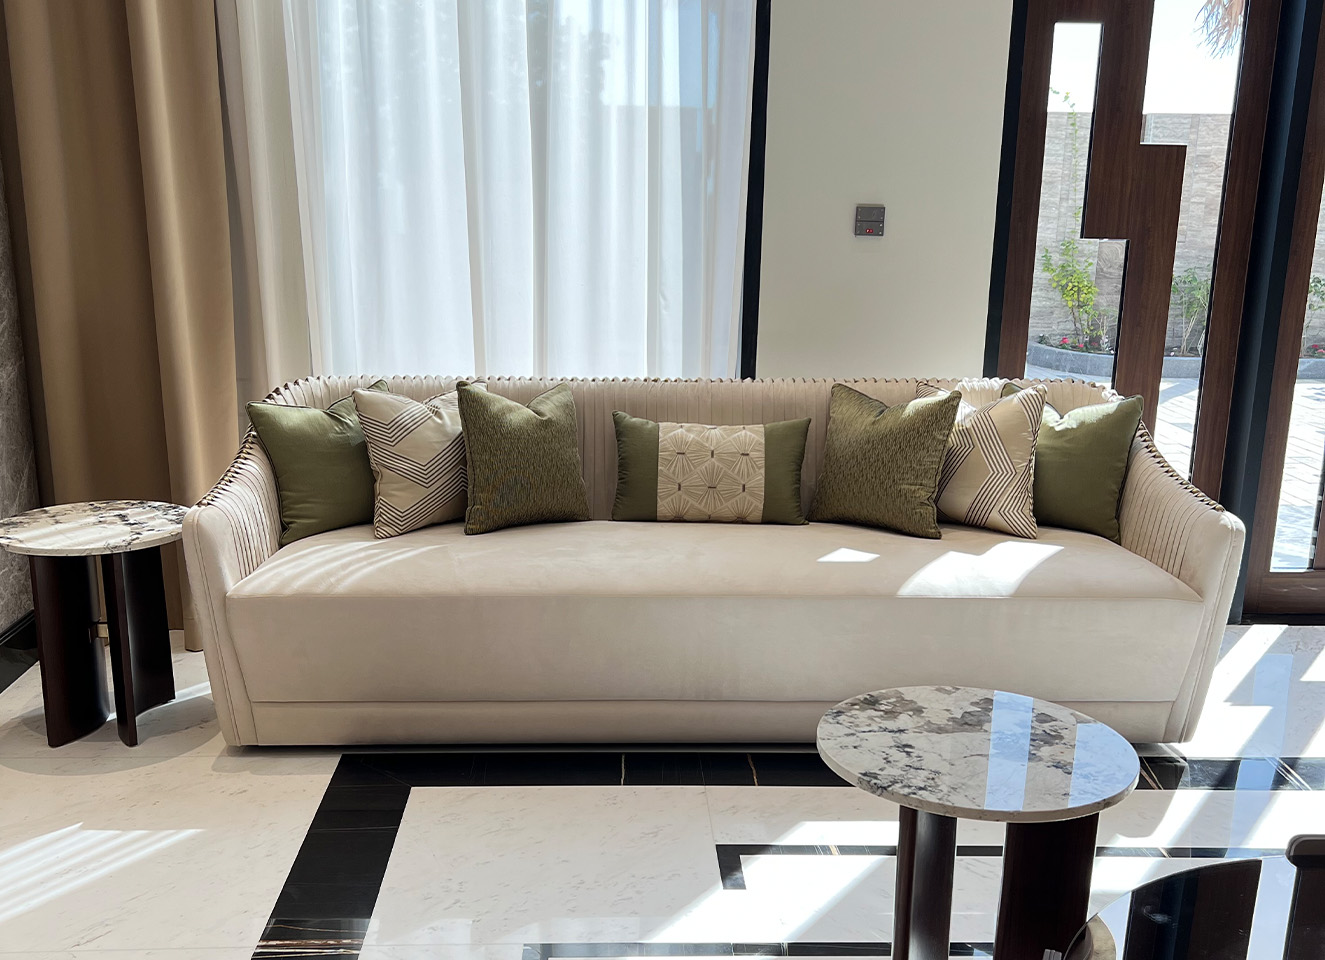 Abu Dhabi Modern Villa: Custom Furniture for Men's Majlis